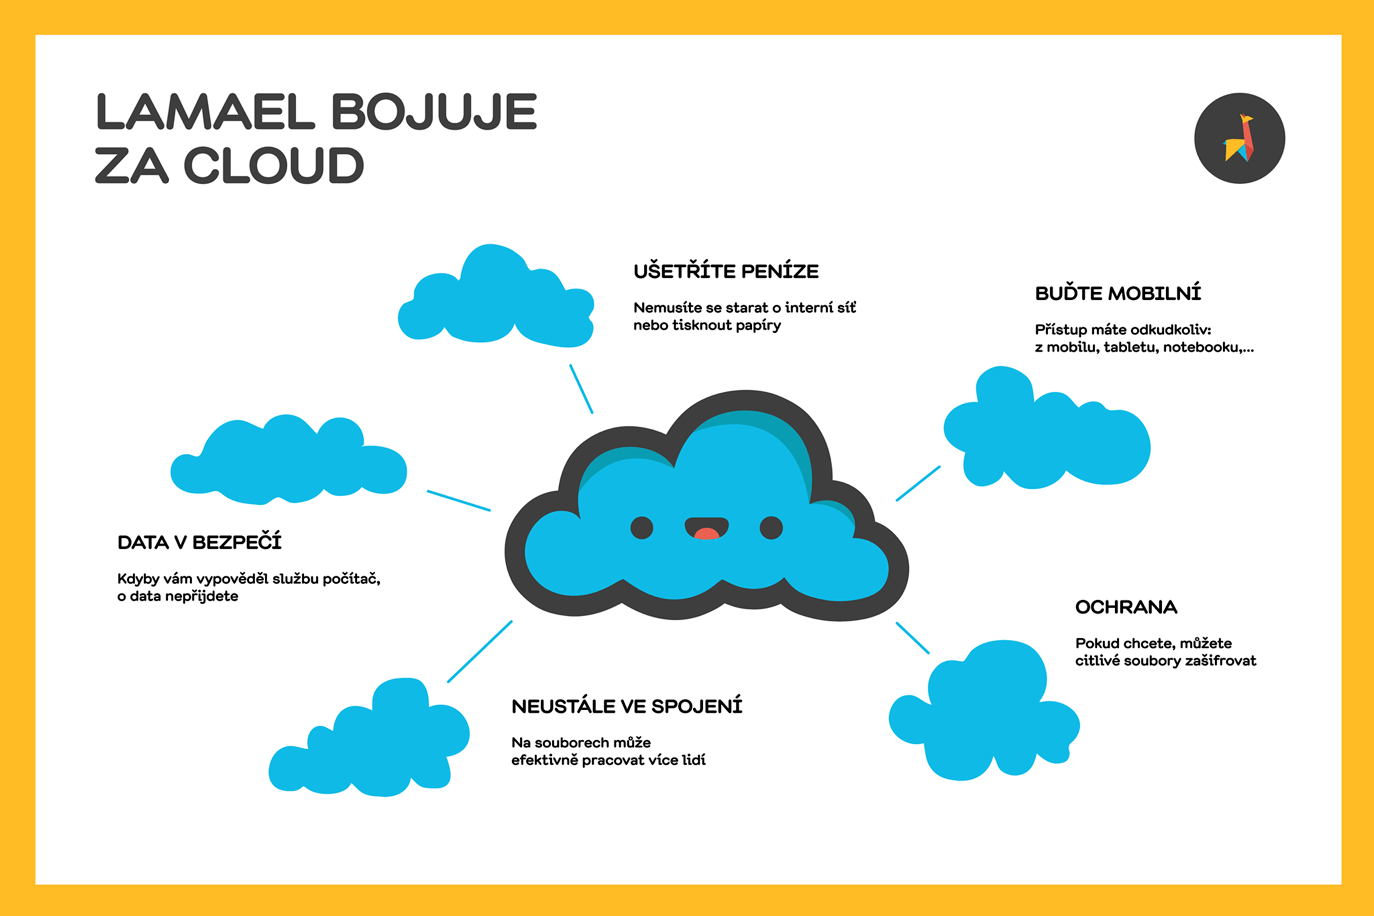 Lamael bojuje za cloud